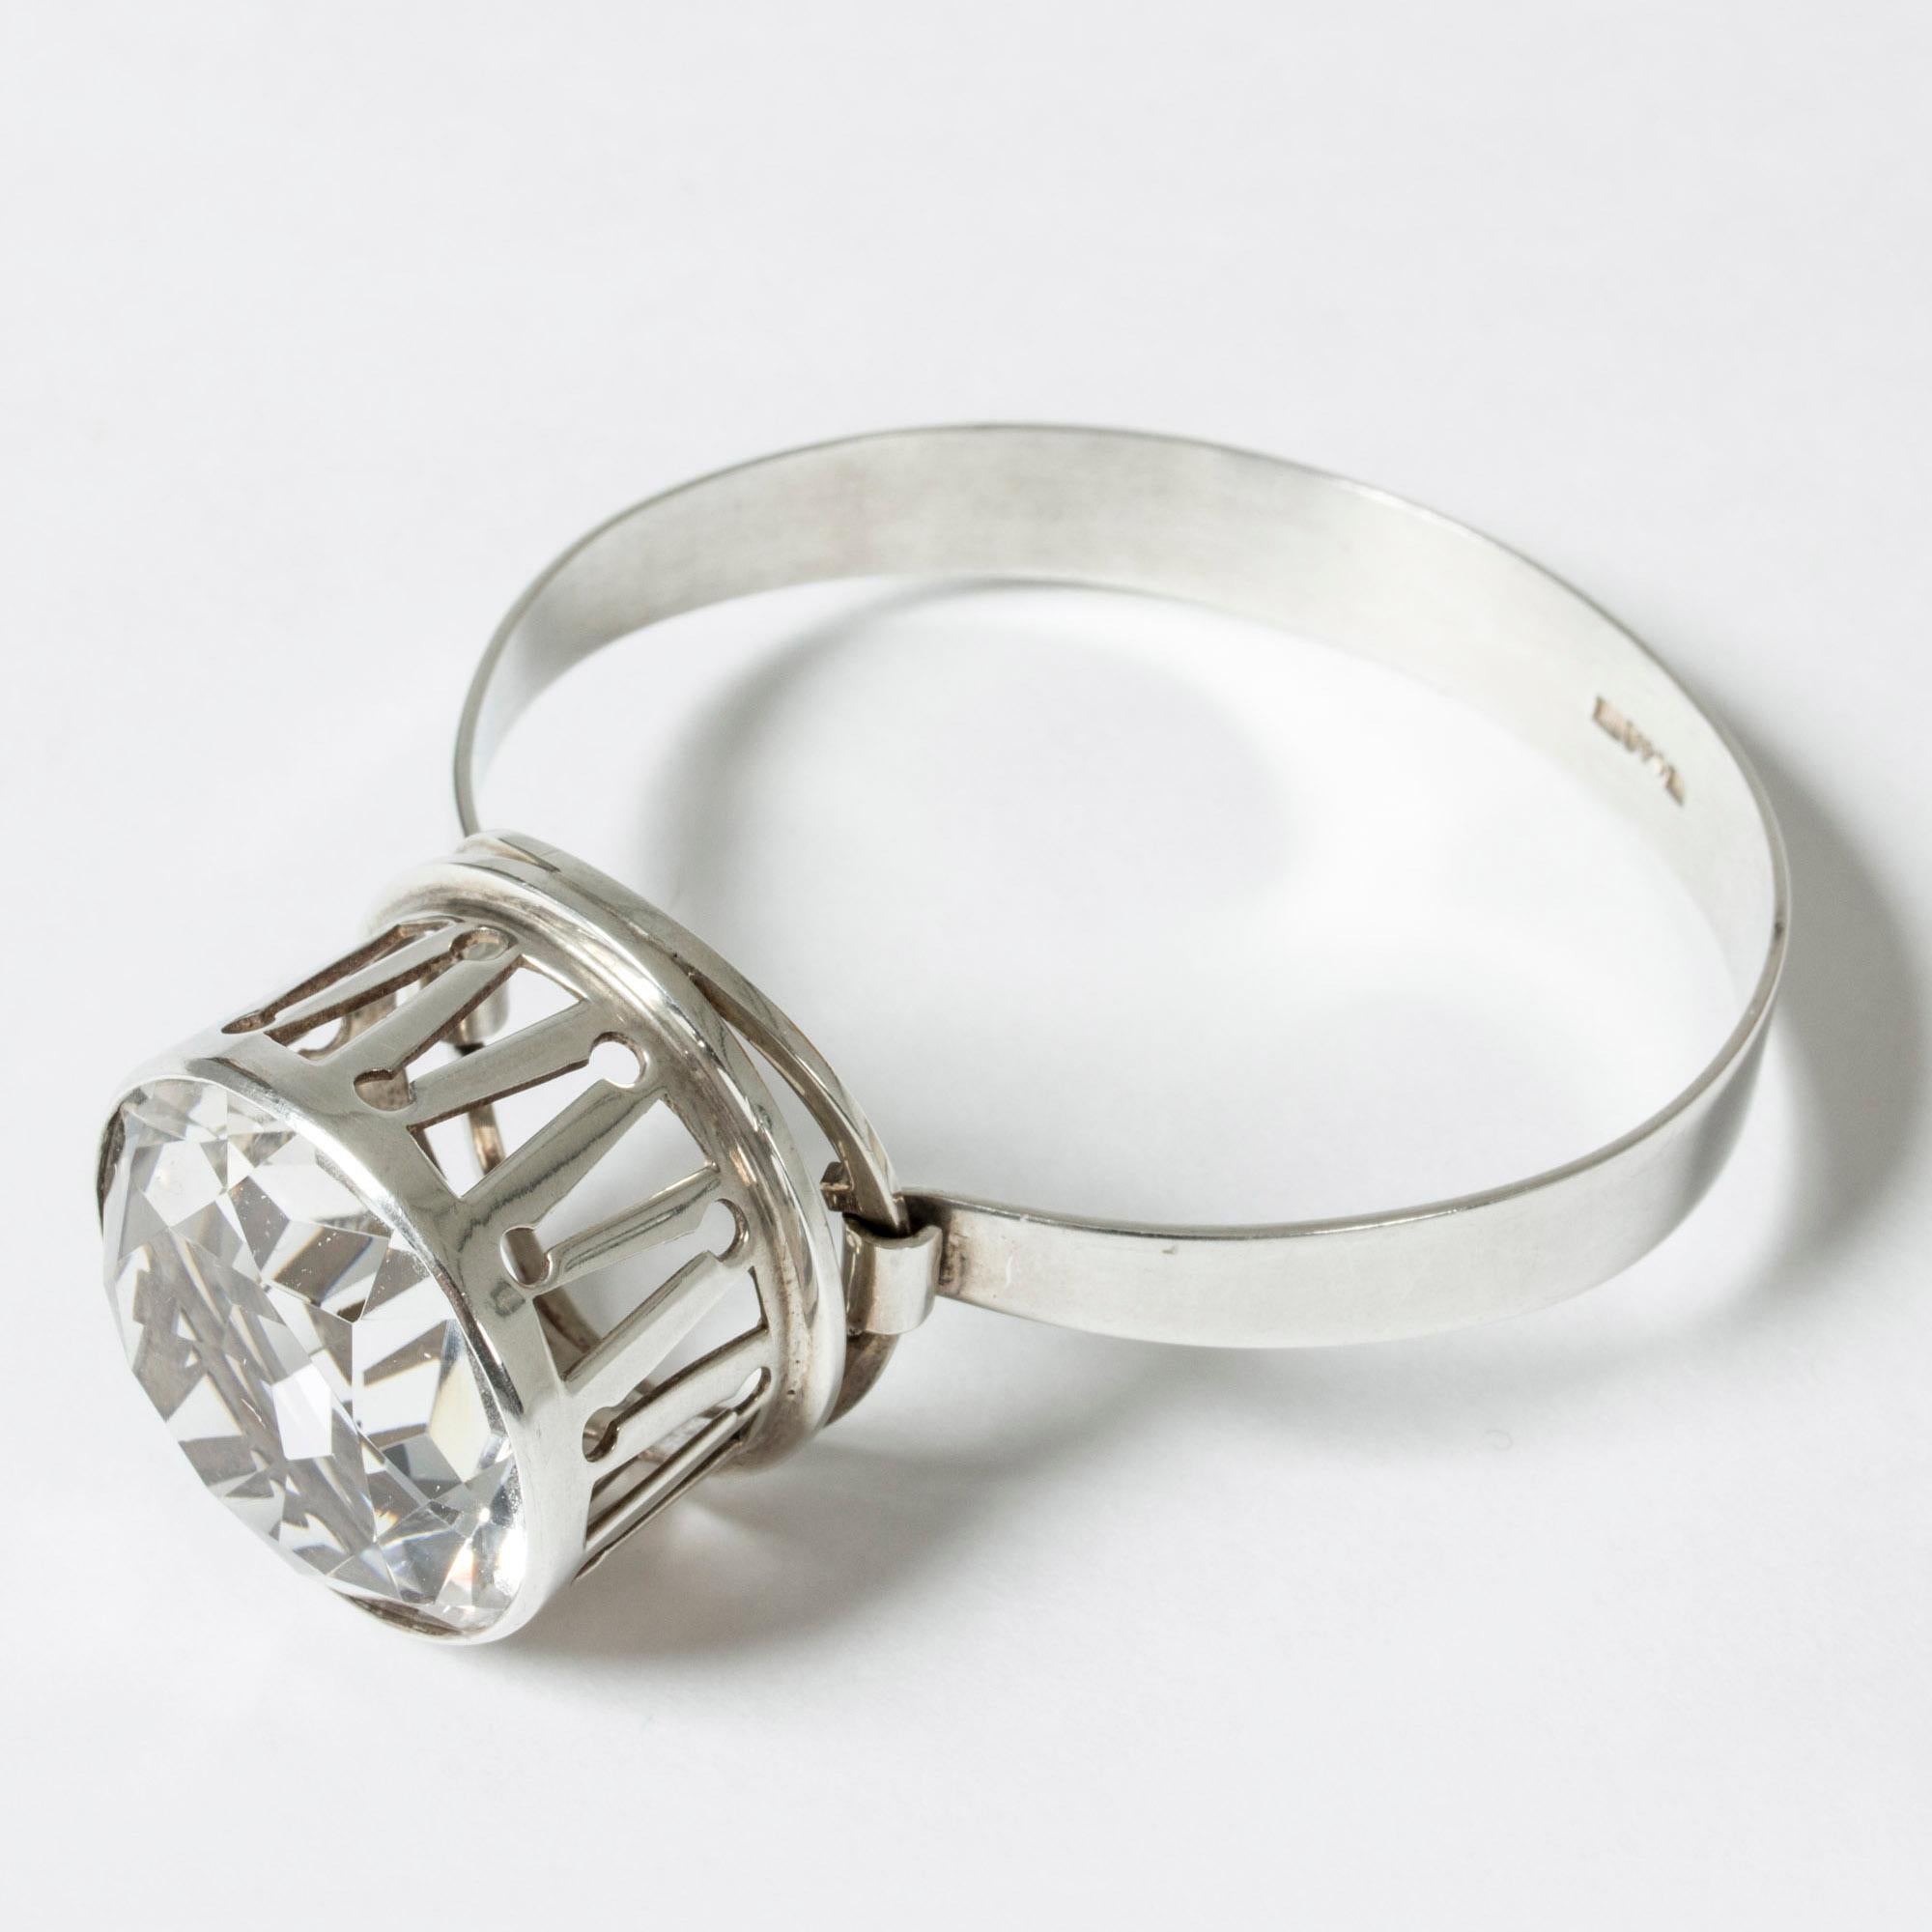 Women's or Men's Silver and Rock Crystal Bracelet from Kaplans, Sweden, 1967